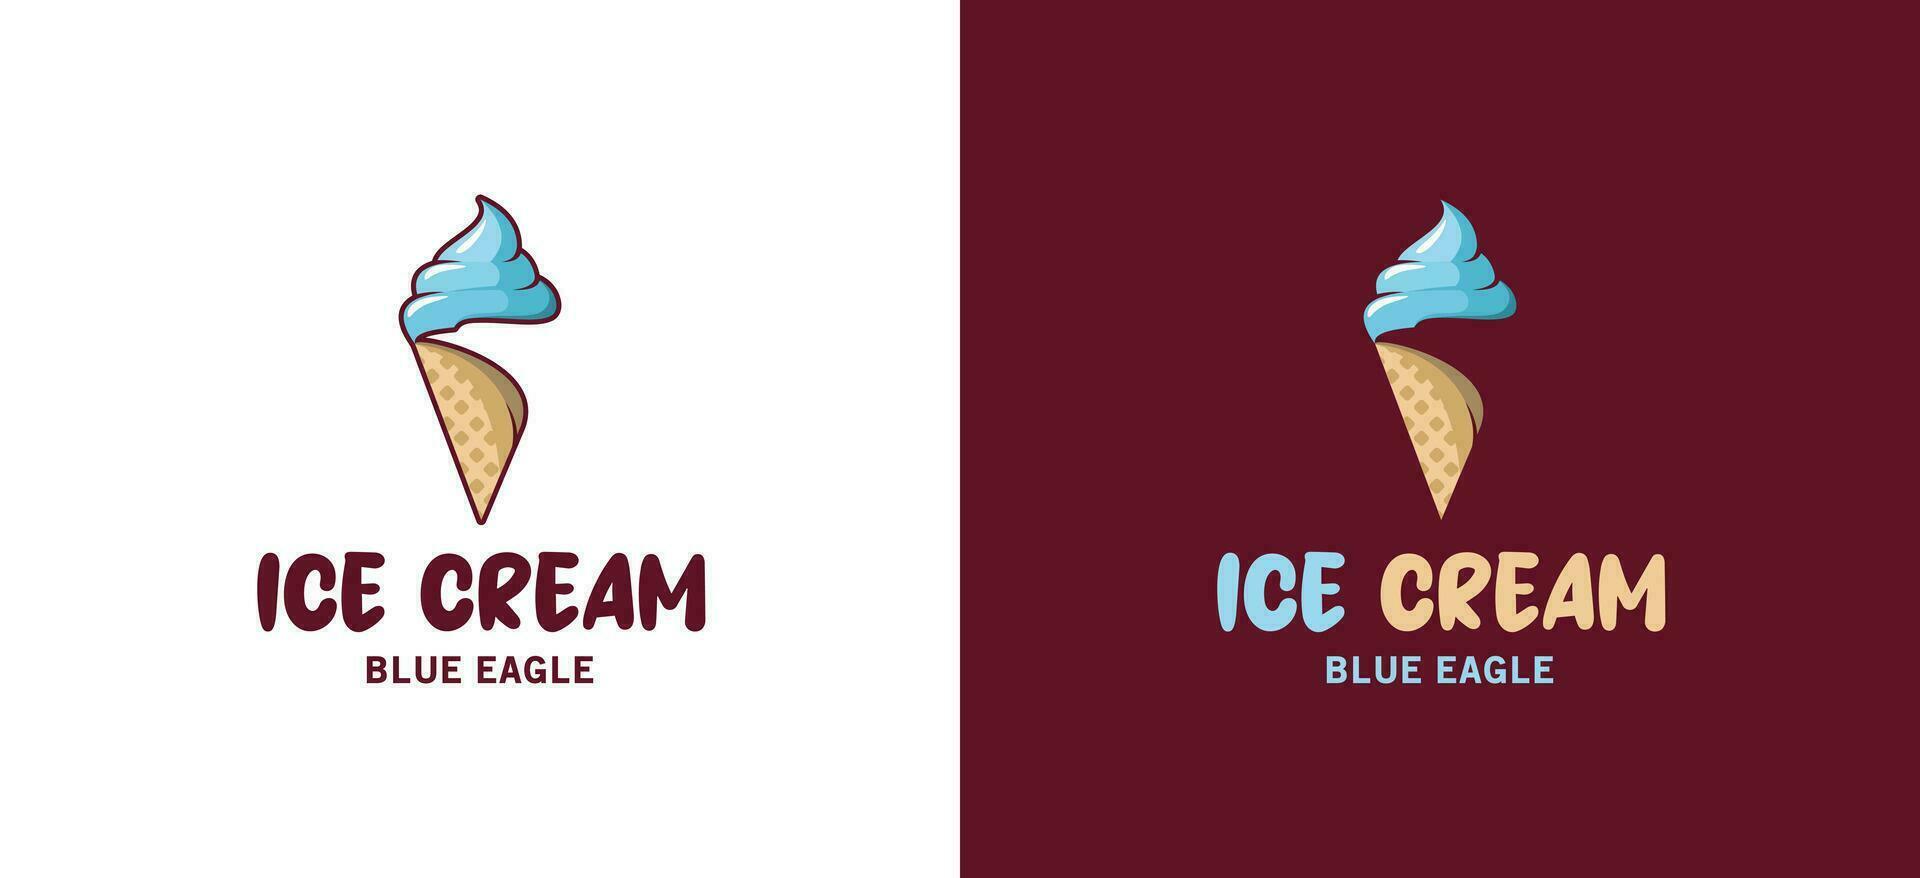 Süss und cremig Blau Eis Eis Sahne Logo Design mit Adler Kopf Konzept vektor